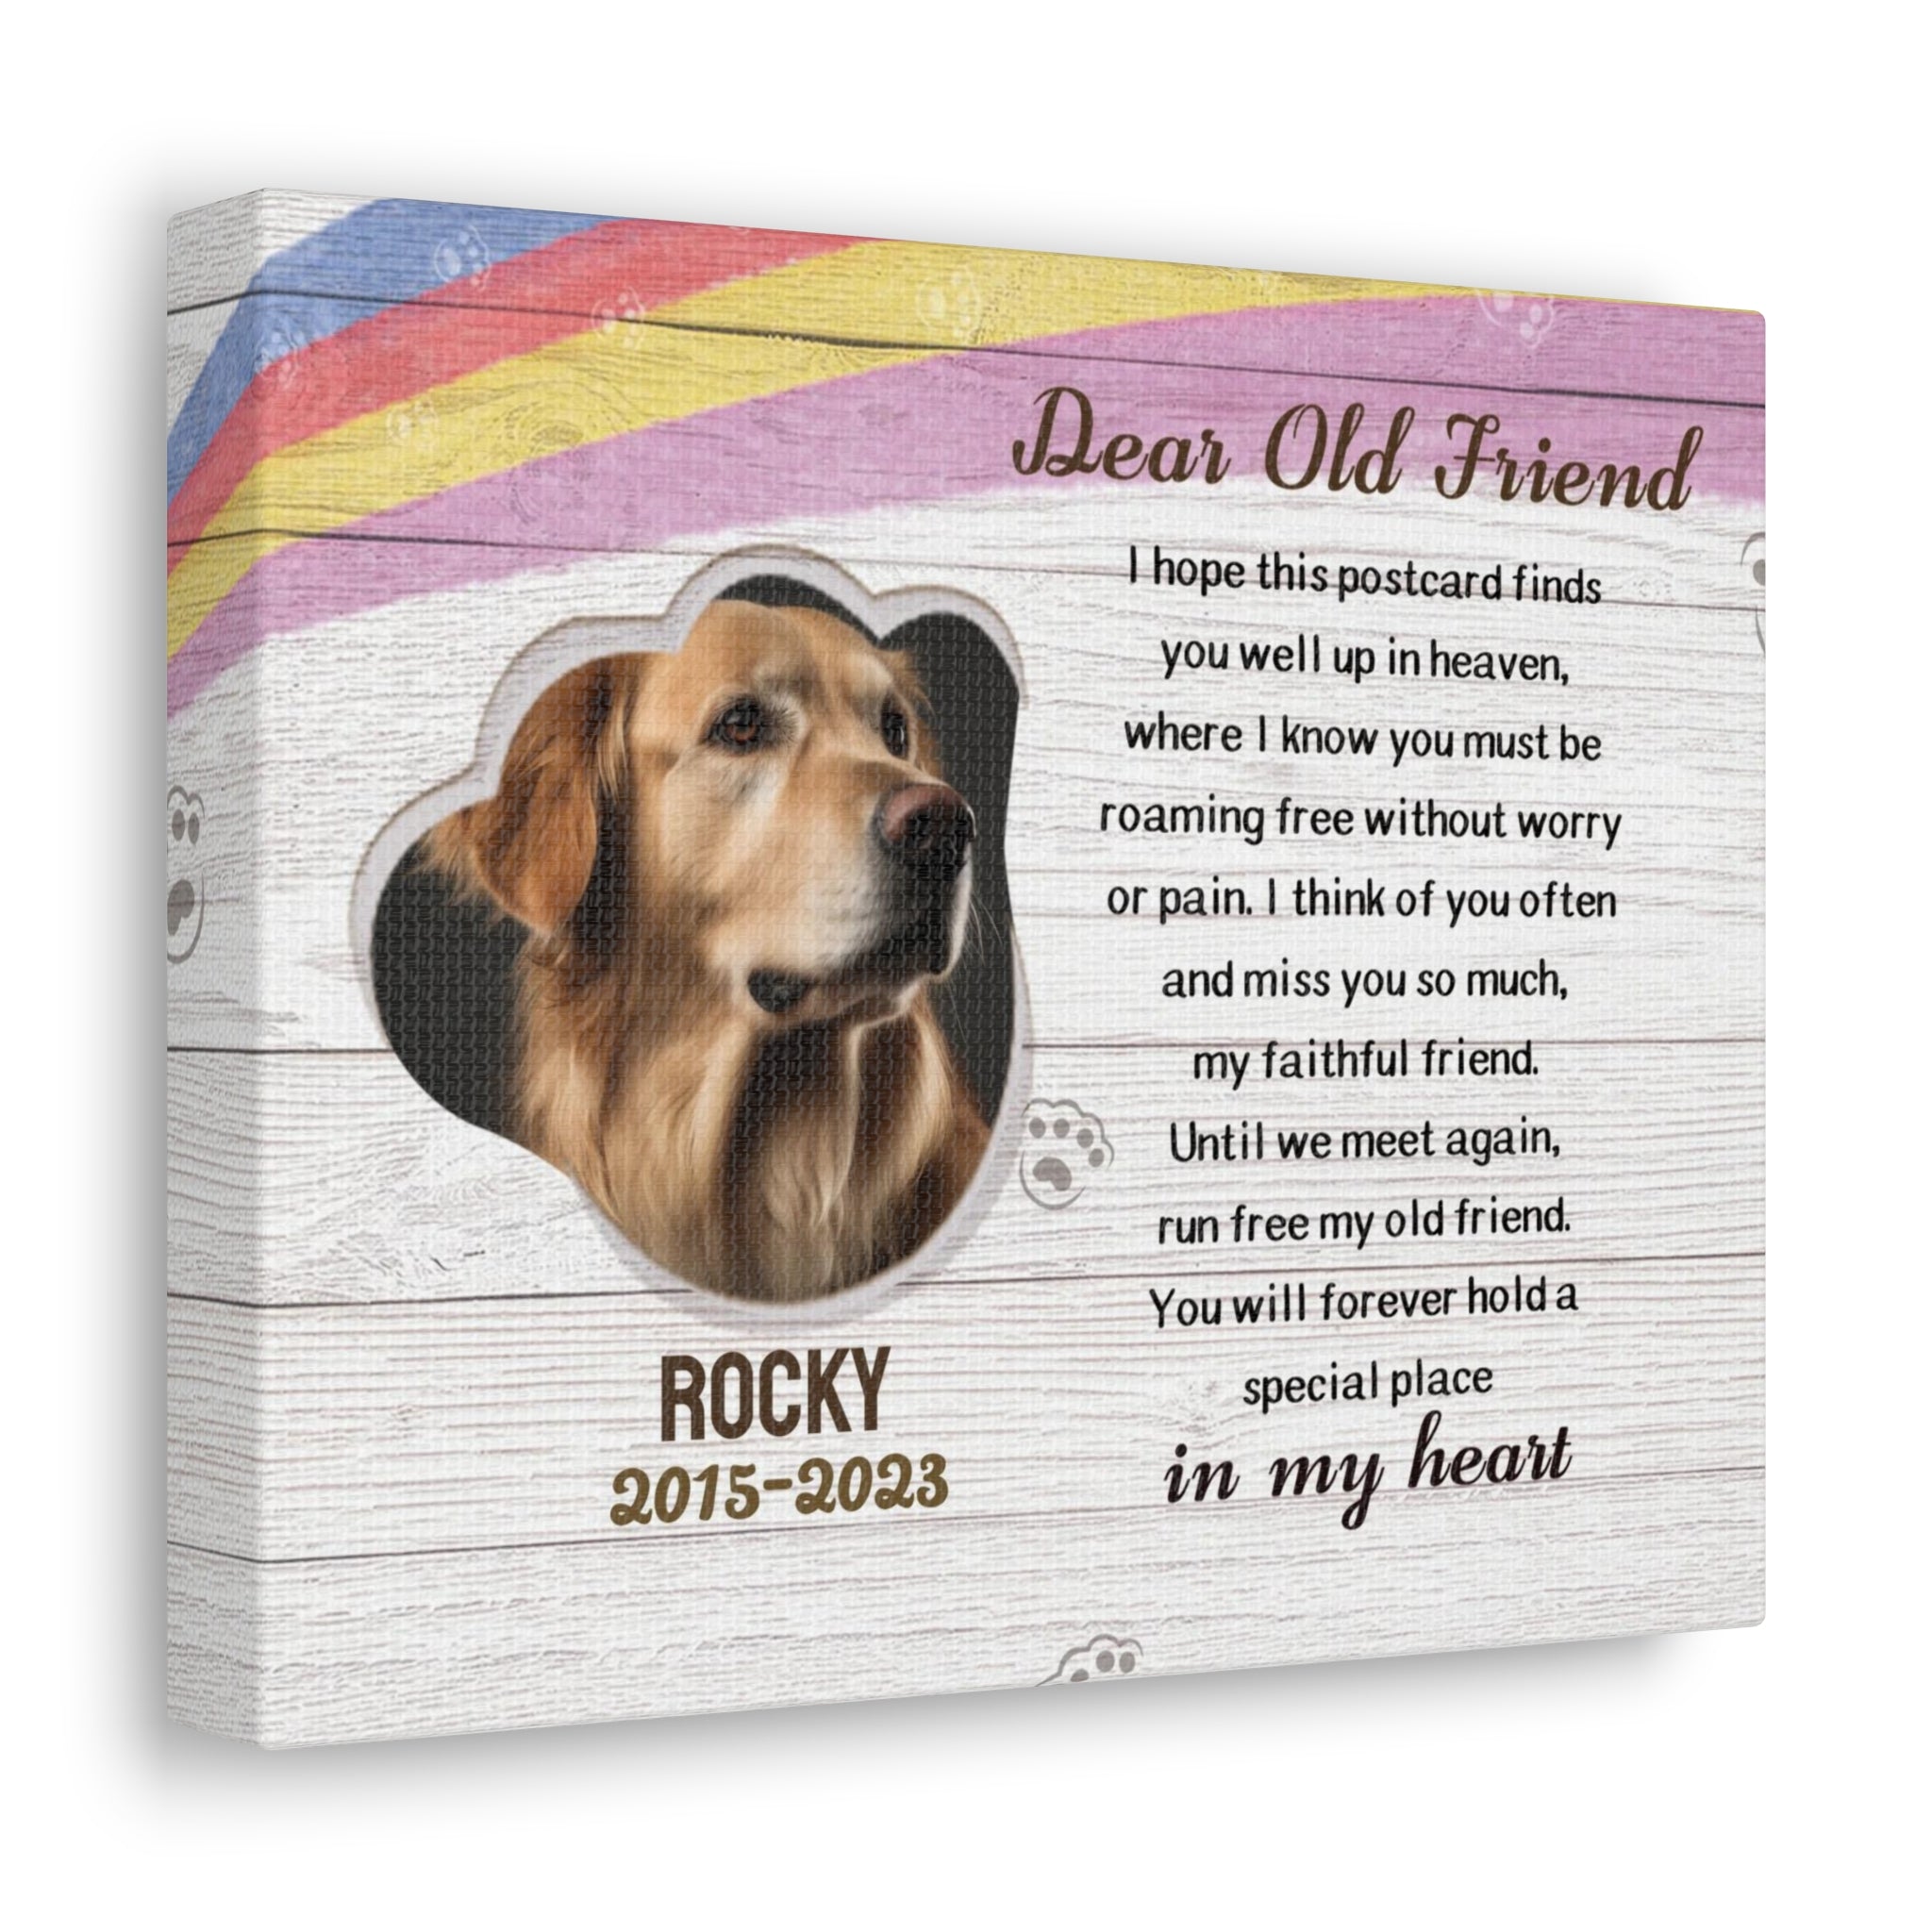 Dear Old Friend - Personalized Canvas Print Pet Memorial